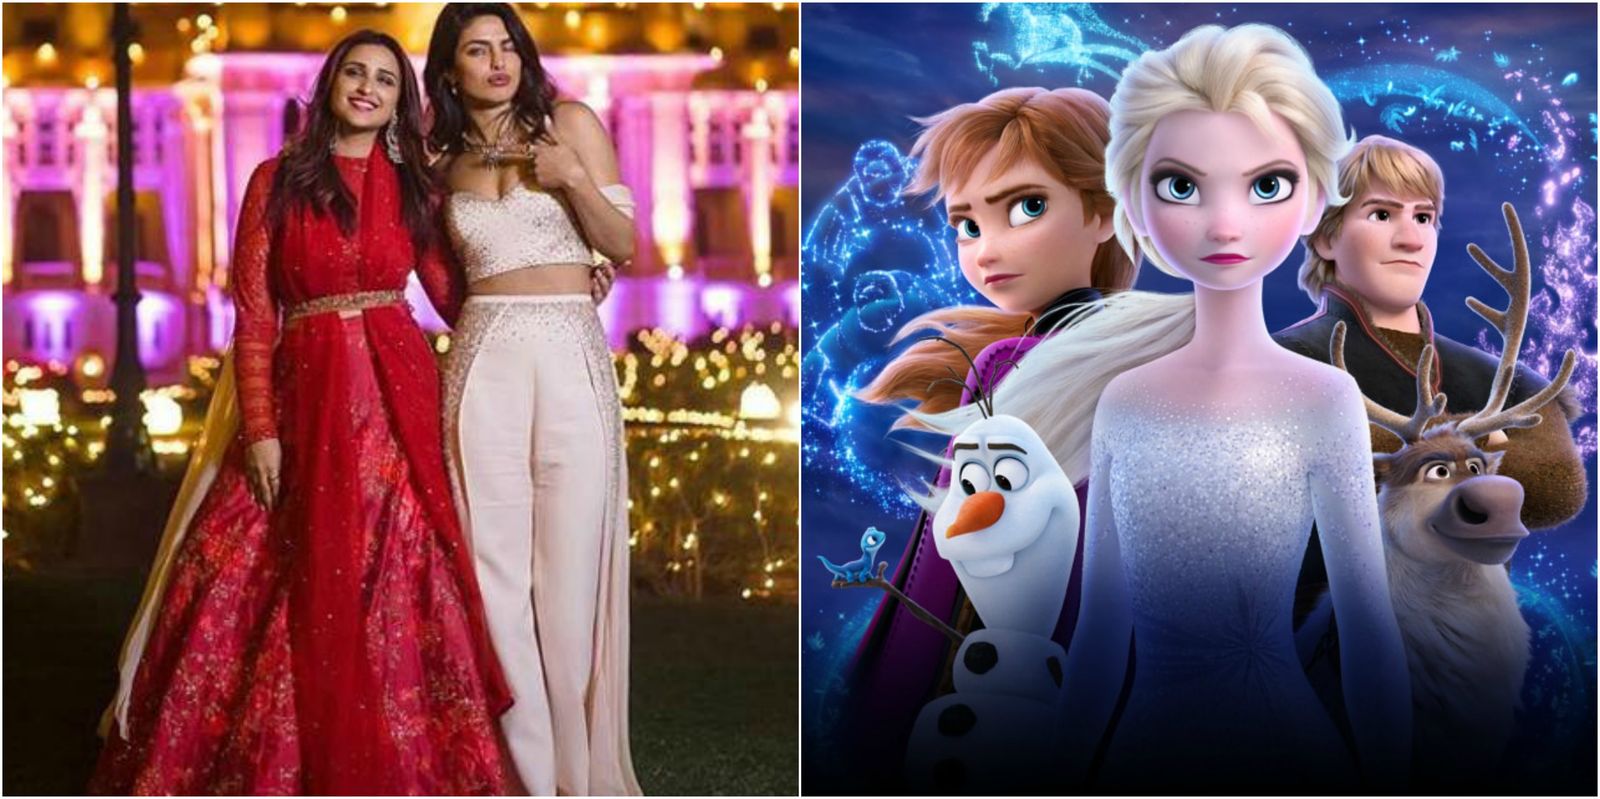 Priyanka Chopra And Parineeta Chopra To Lend Their Voices To Elsa And Anna For Frozen 2 In Hindi